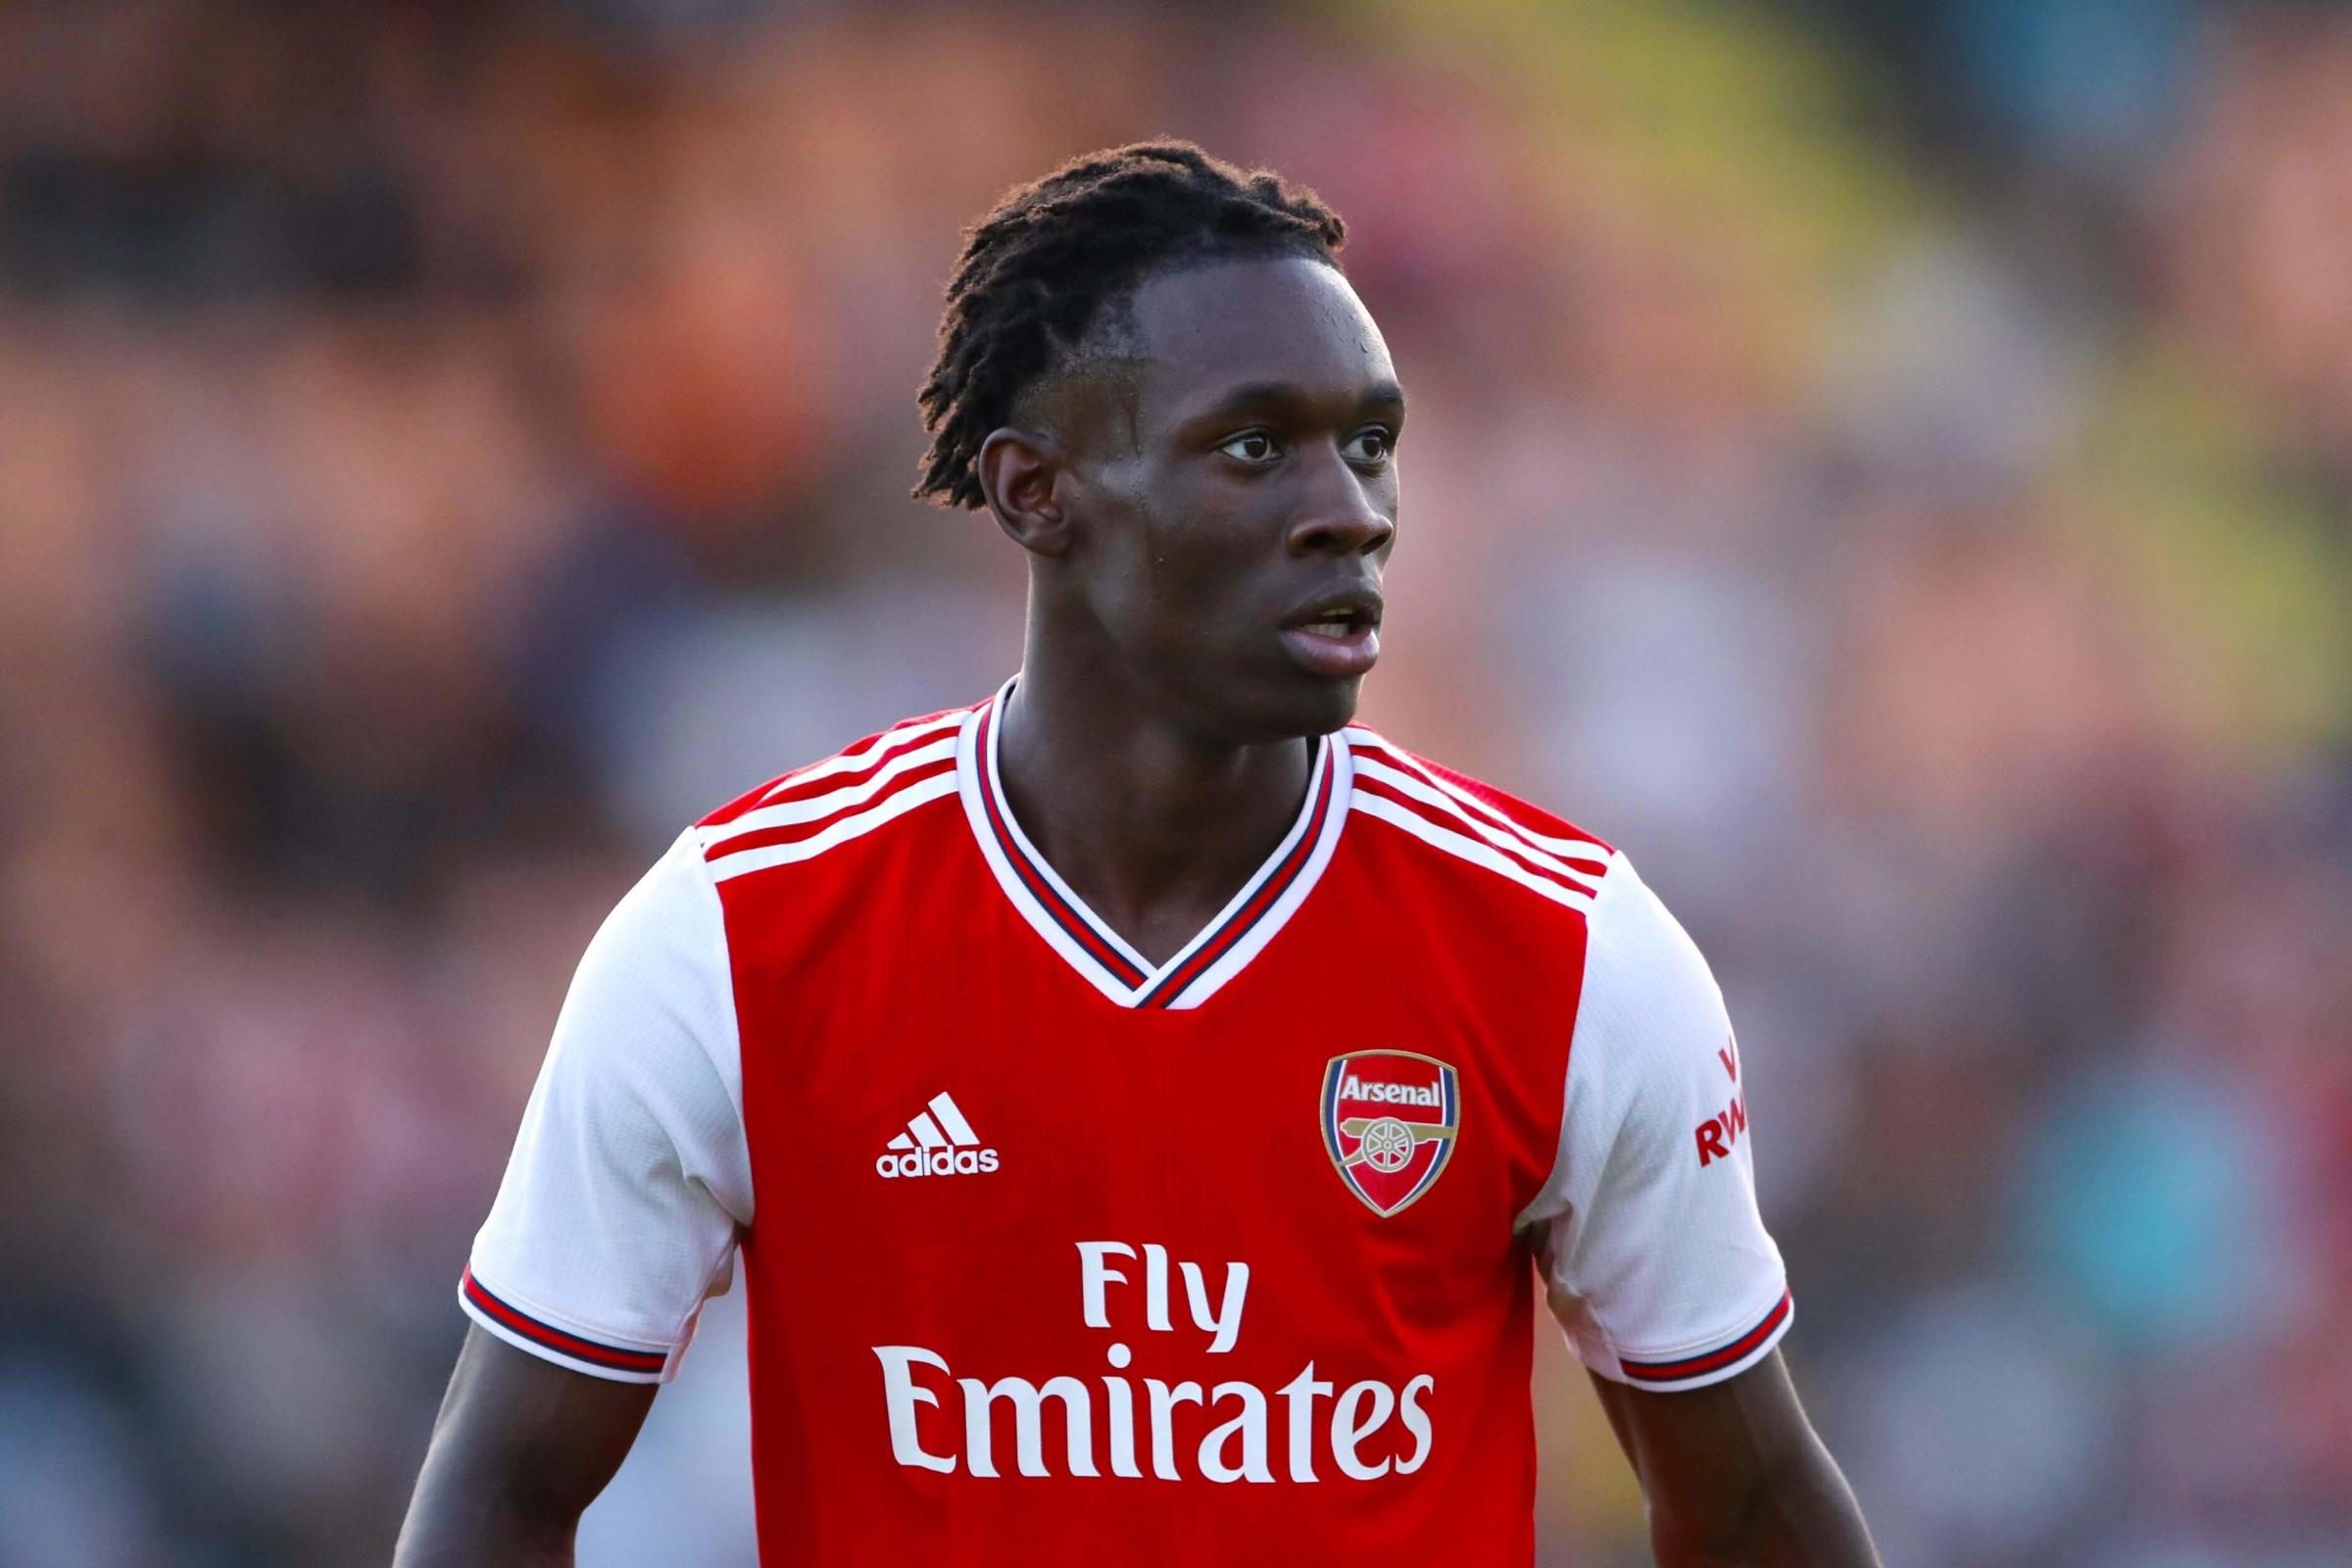 Arsenal striker Folarin Balogun has completed his love move to Boro